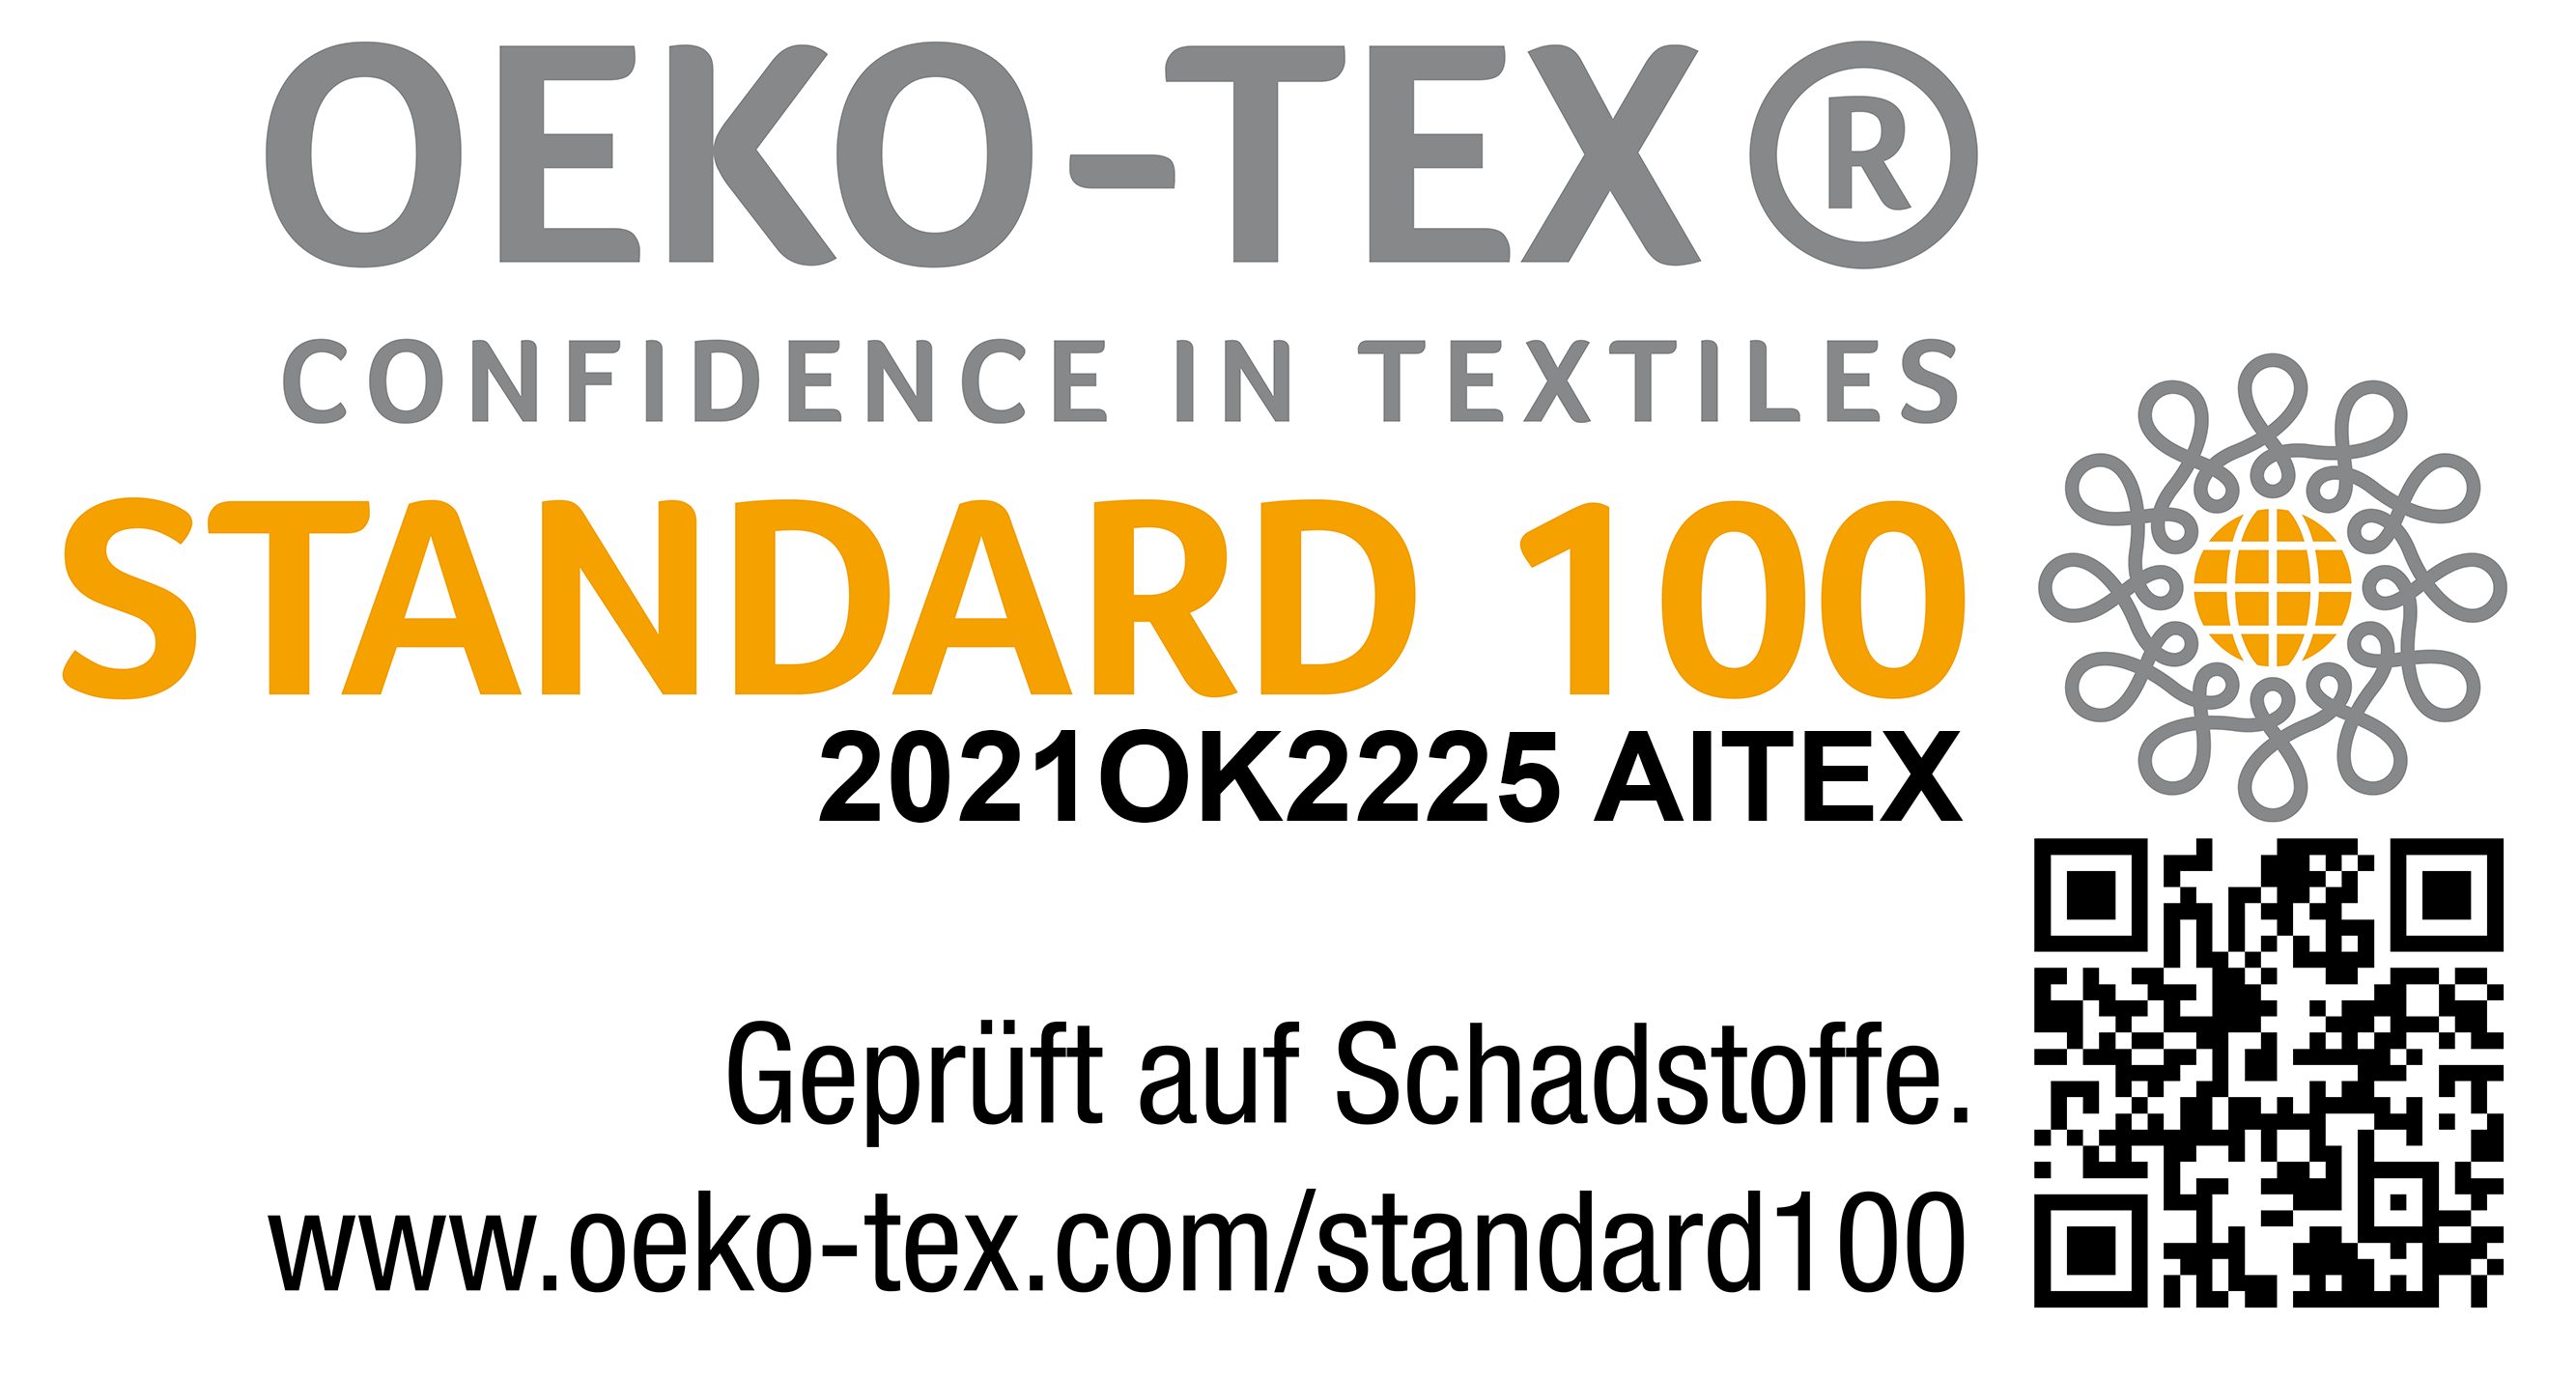 Geschirrtücher life Küchentücher Spühltuch GTS 4er grau Baumwolle 100% Spültuch 70g Set Textile Abwaschlappen, 4 (4-tlg)